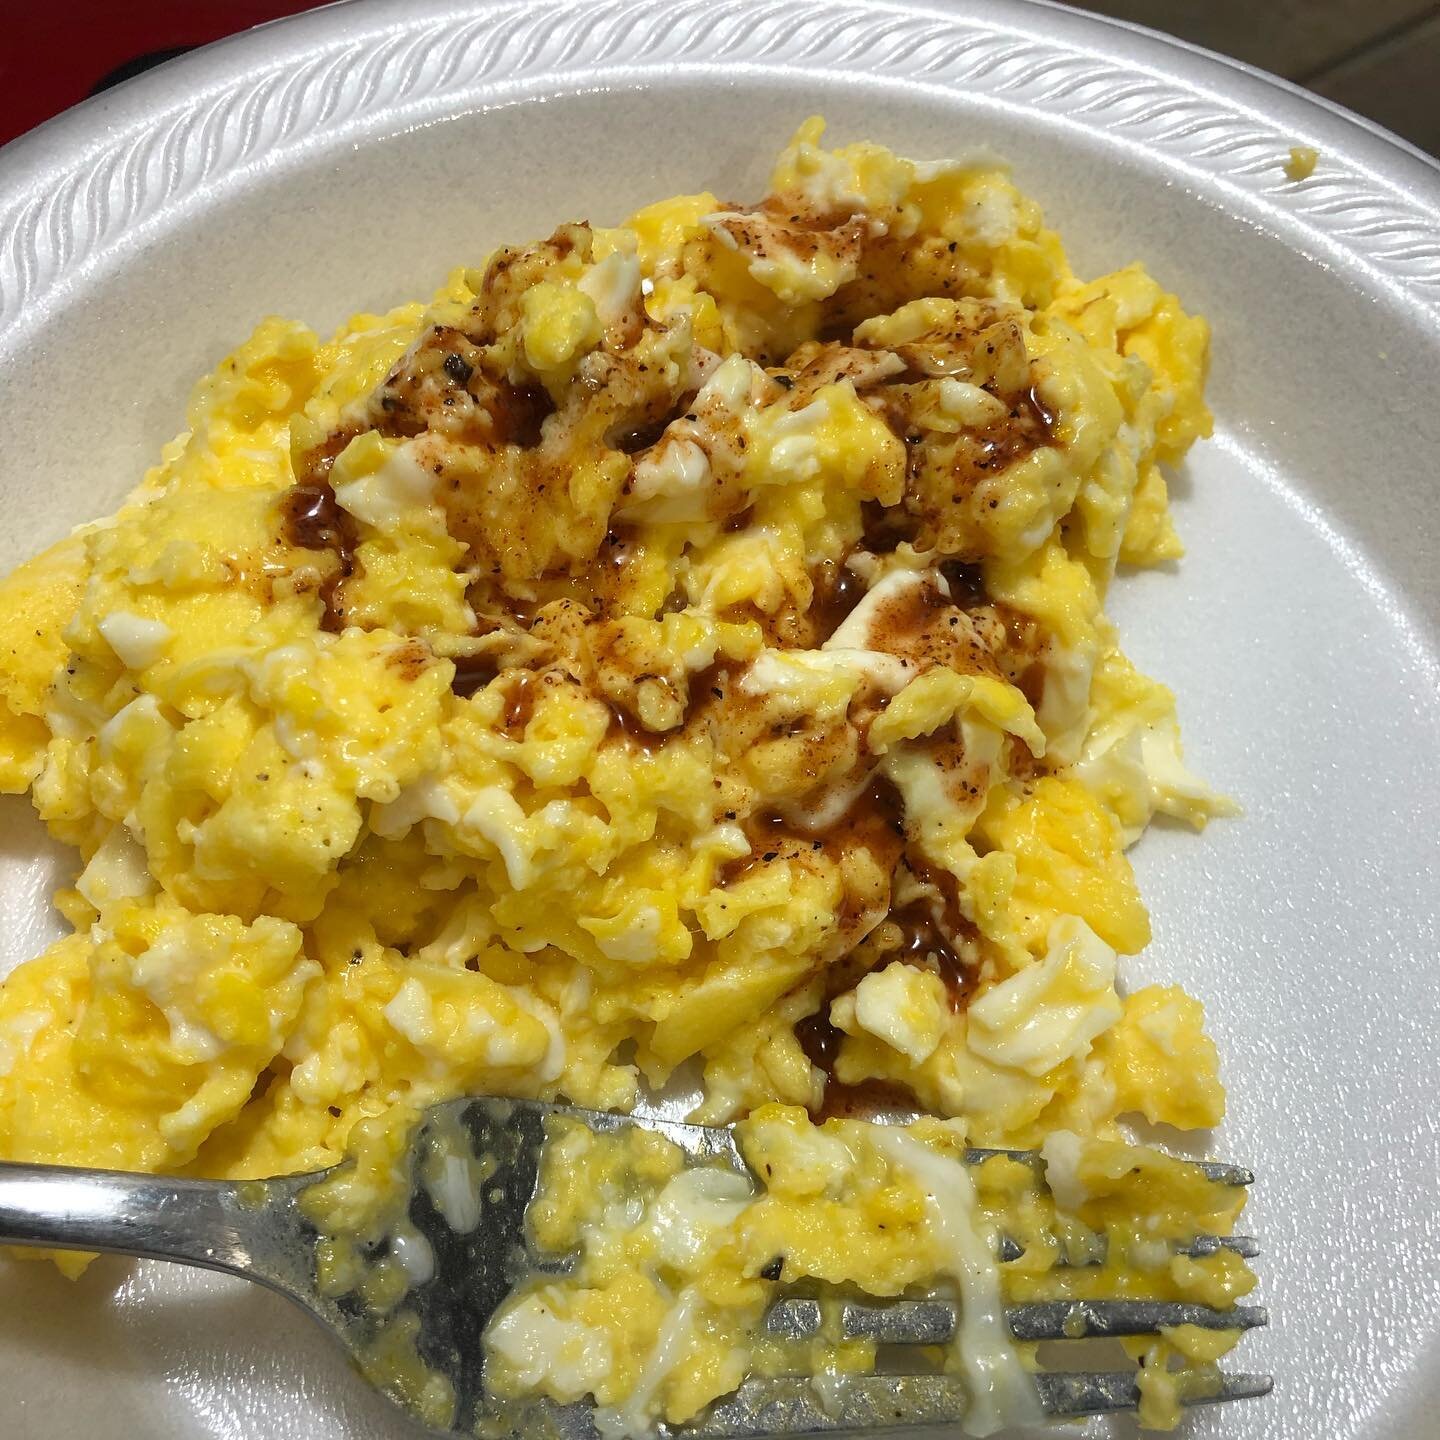 Smittys Small Batch on scrambled eggs is still one of my faves!! 🔥 #itsoktobedifferent #bbqsauce #smittyssmallbatch